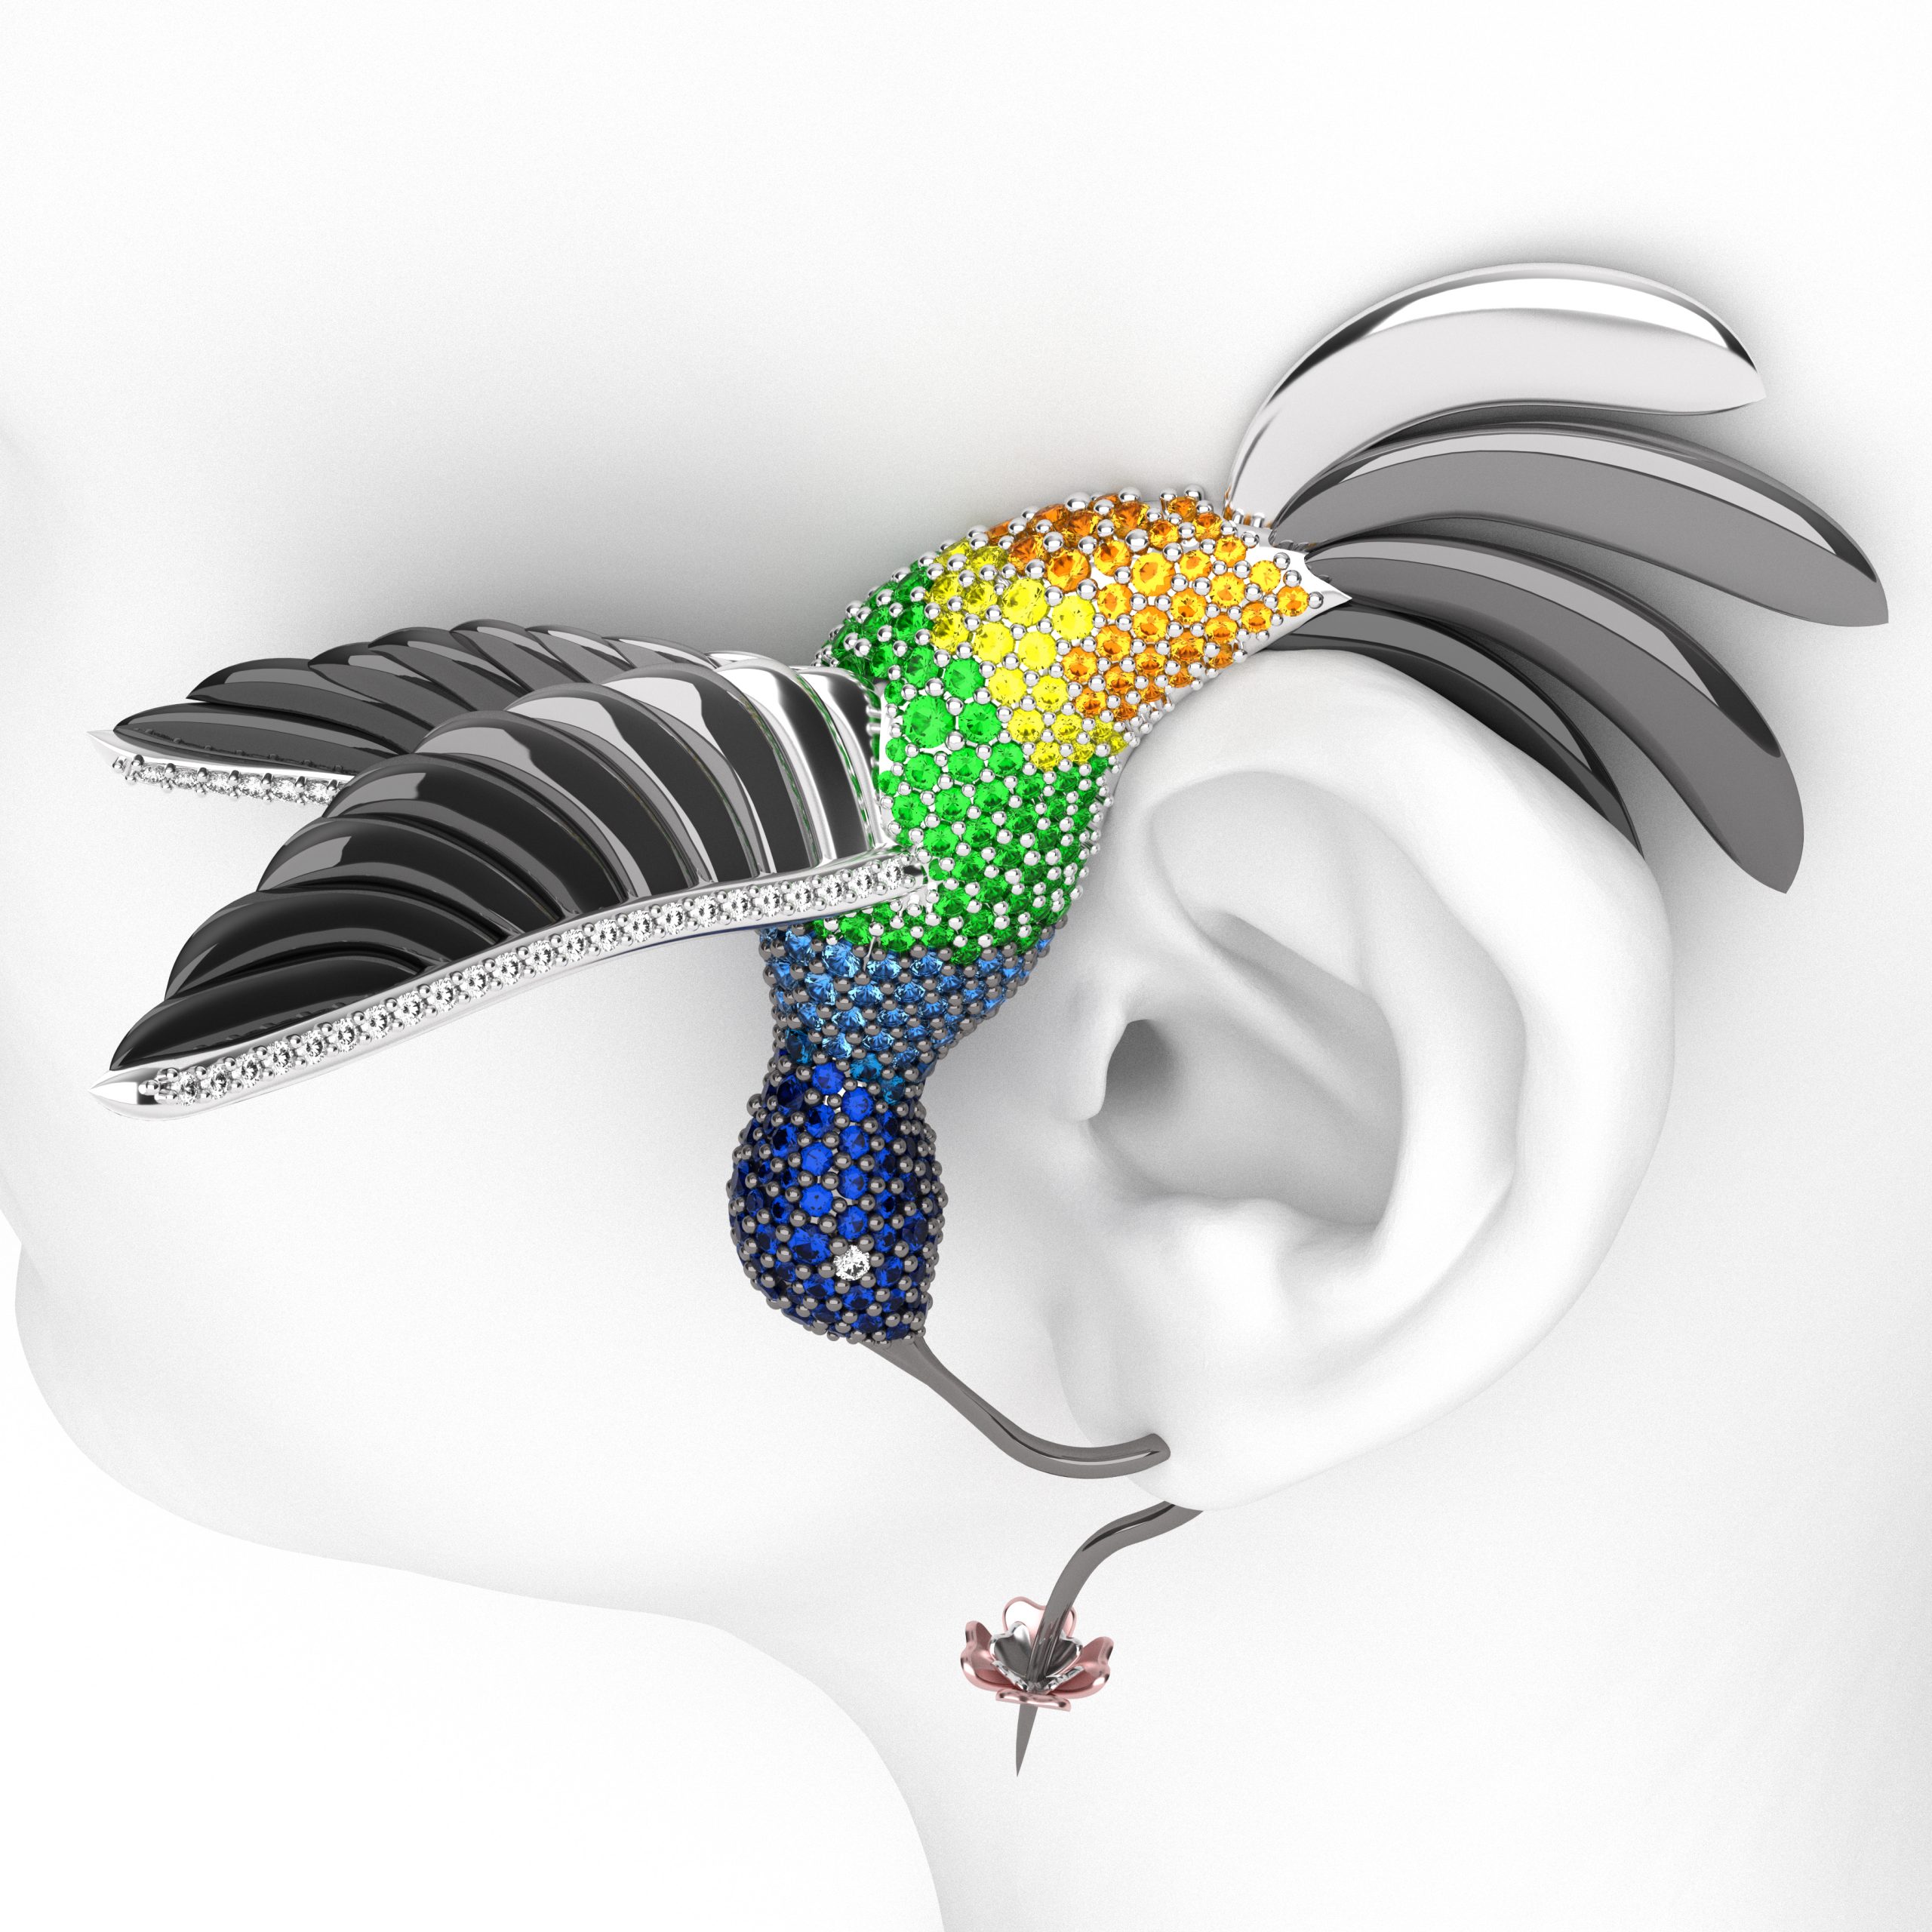 The Hummingbird - single earring